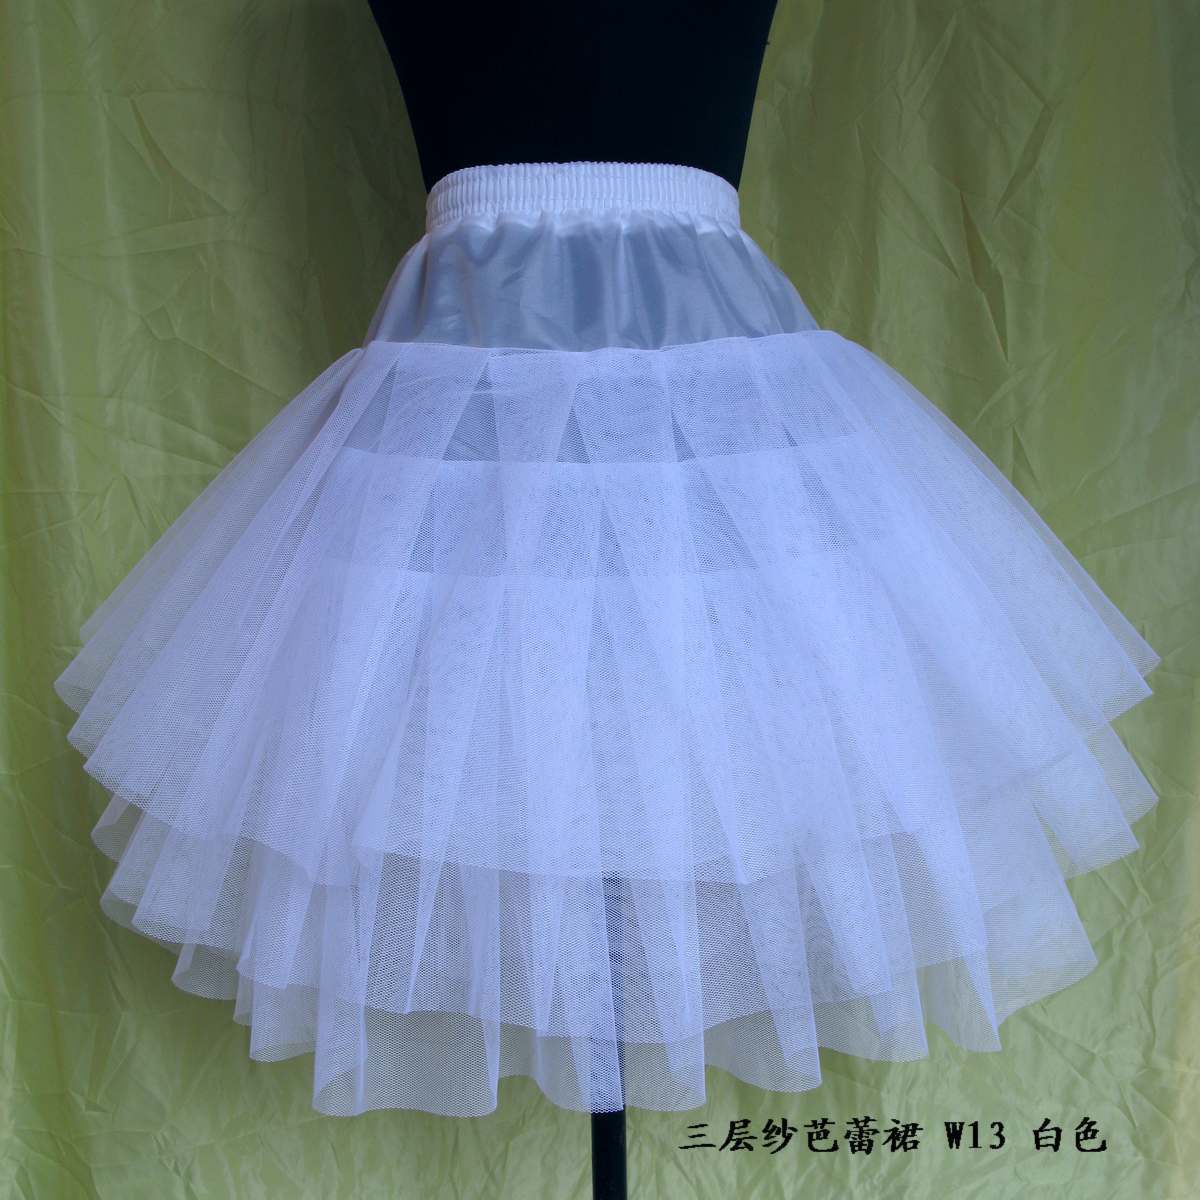 Hard yarn net w13 white elastic waist bride pannier formal dress skirt wedding dress slip